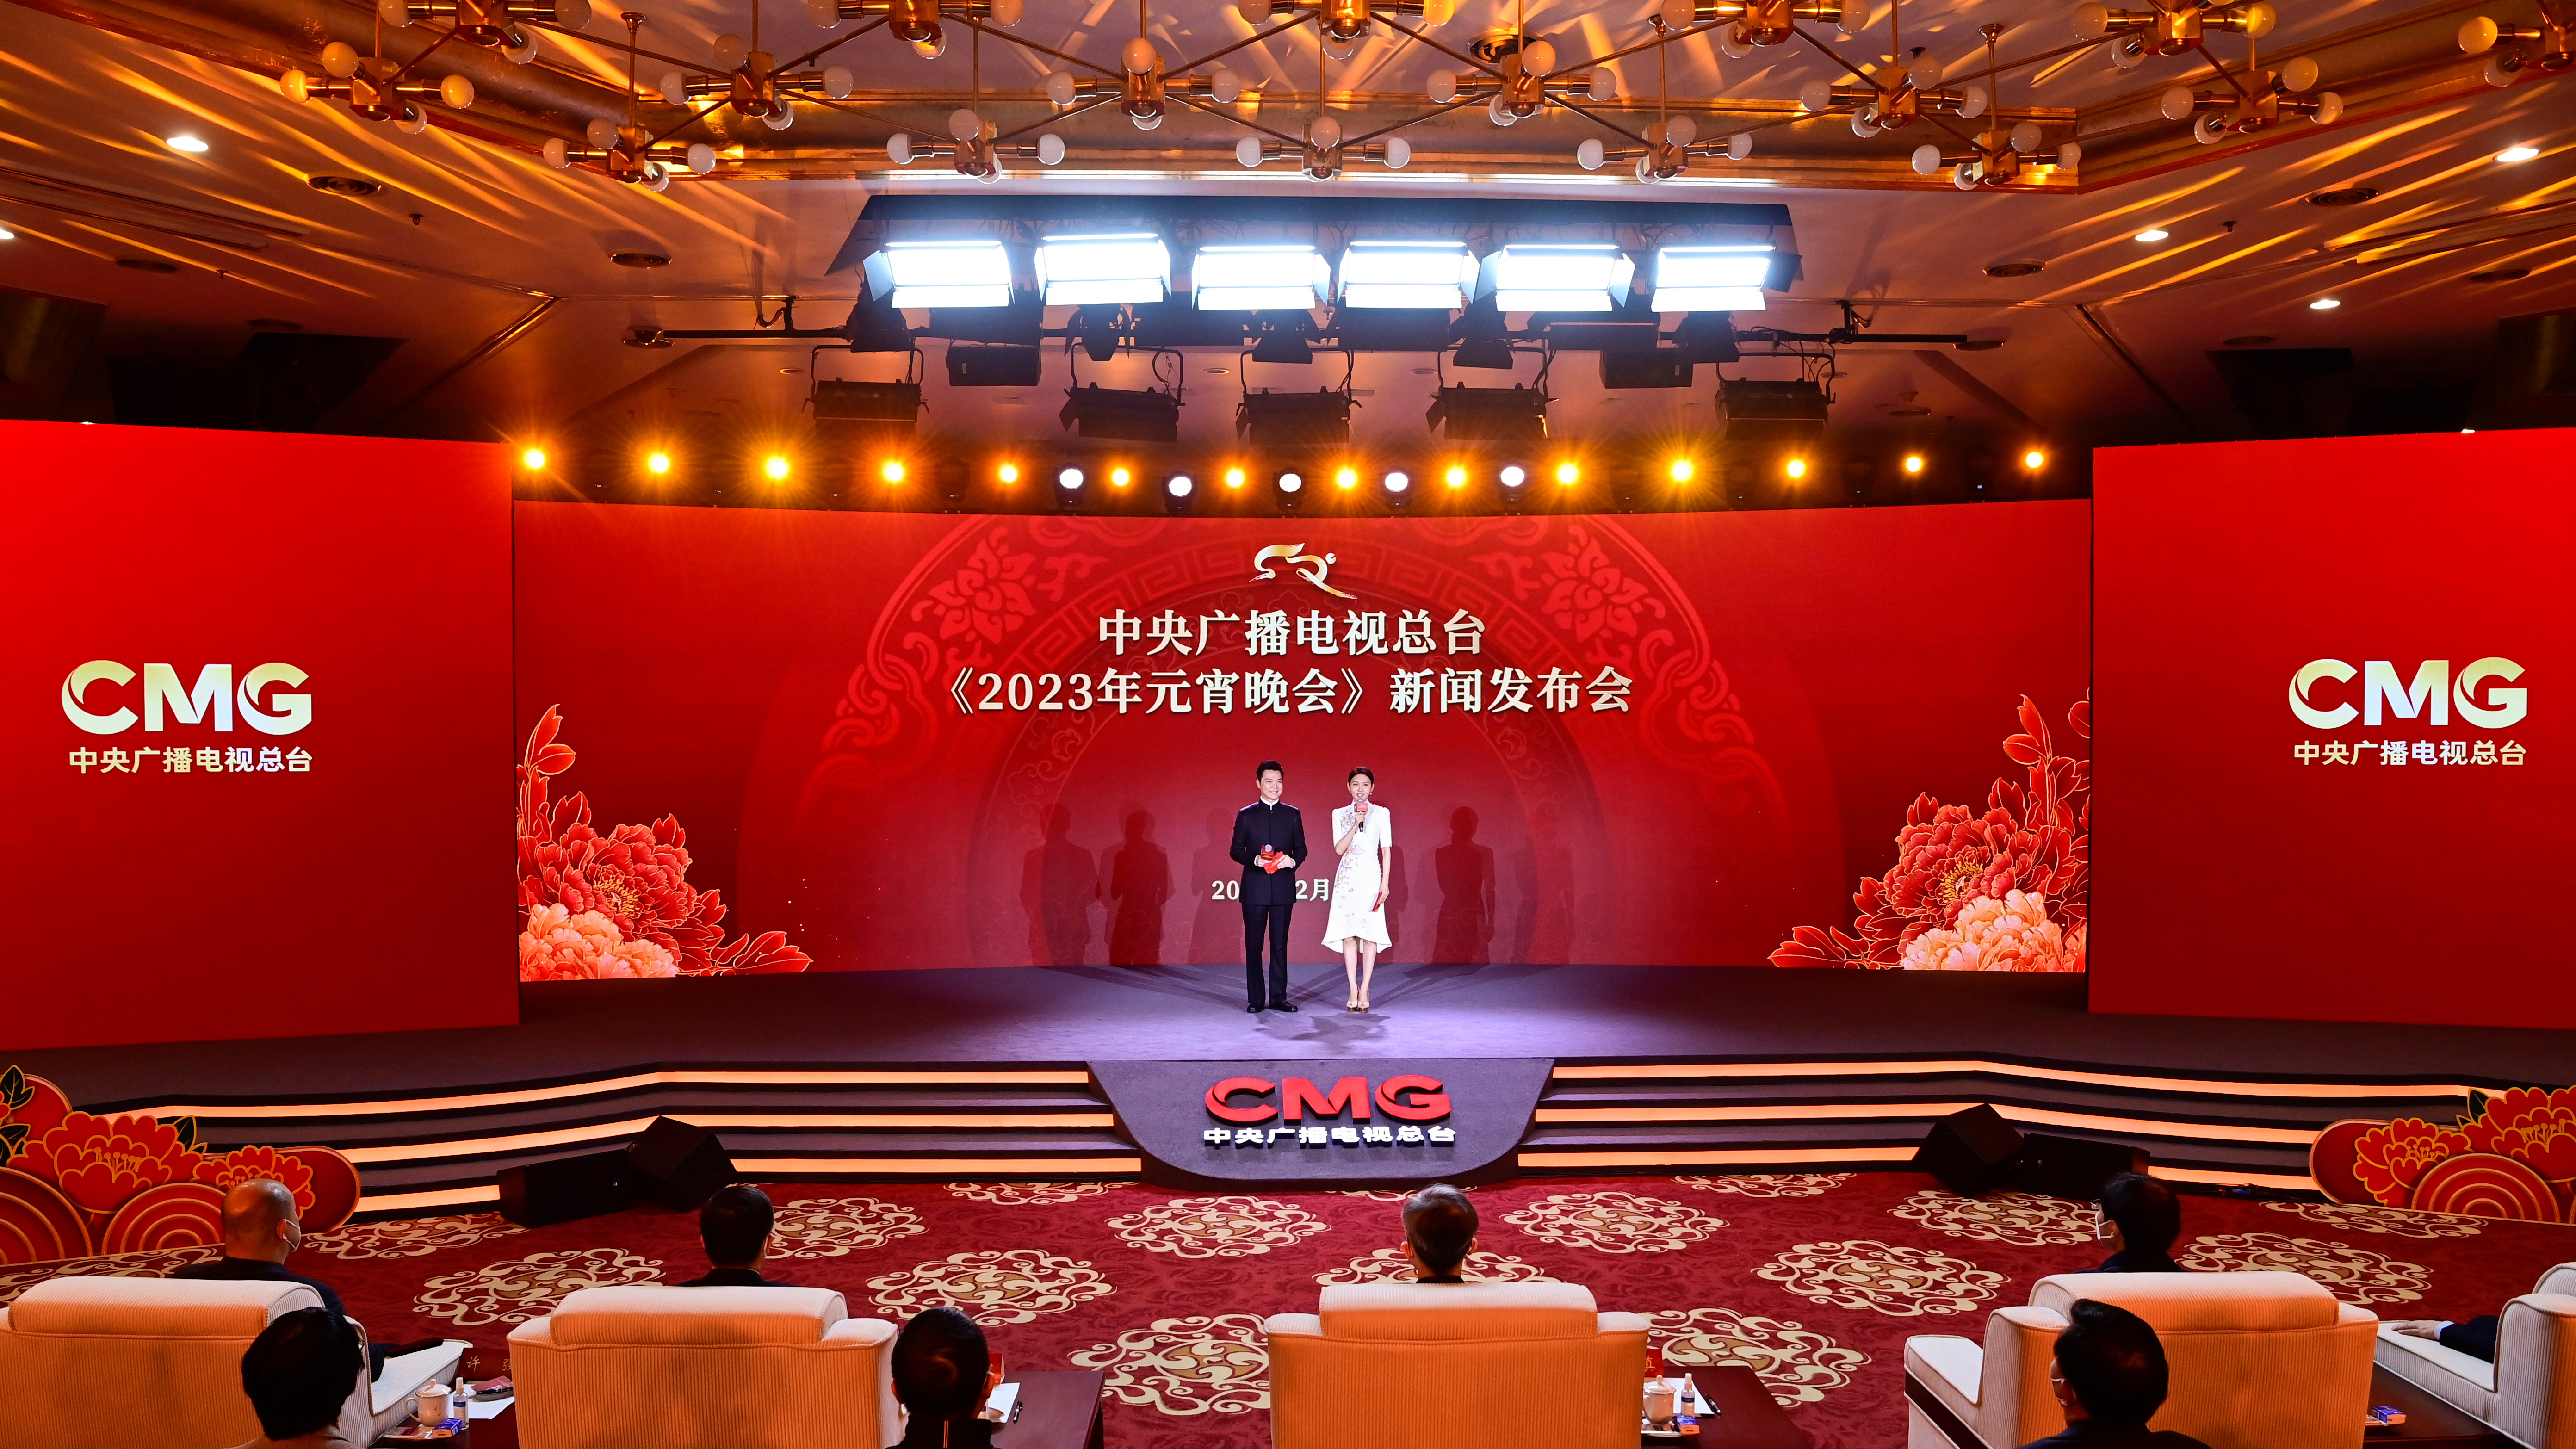 CMG unveils Lantern Festival Gala technological innovation highlights